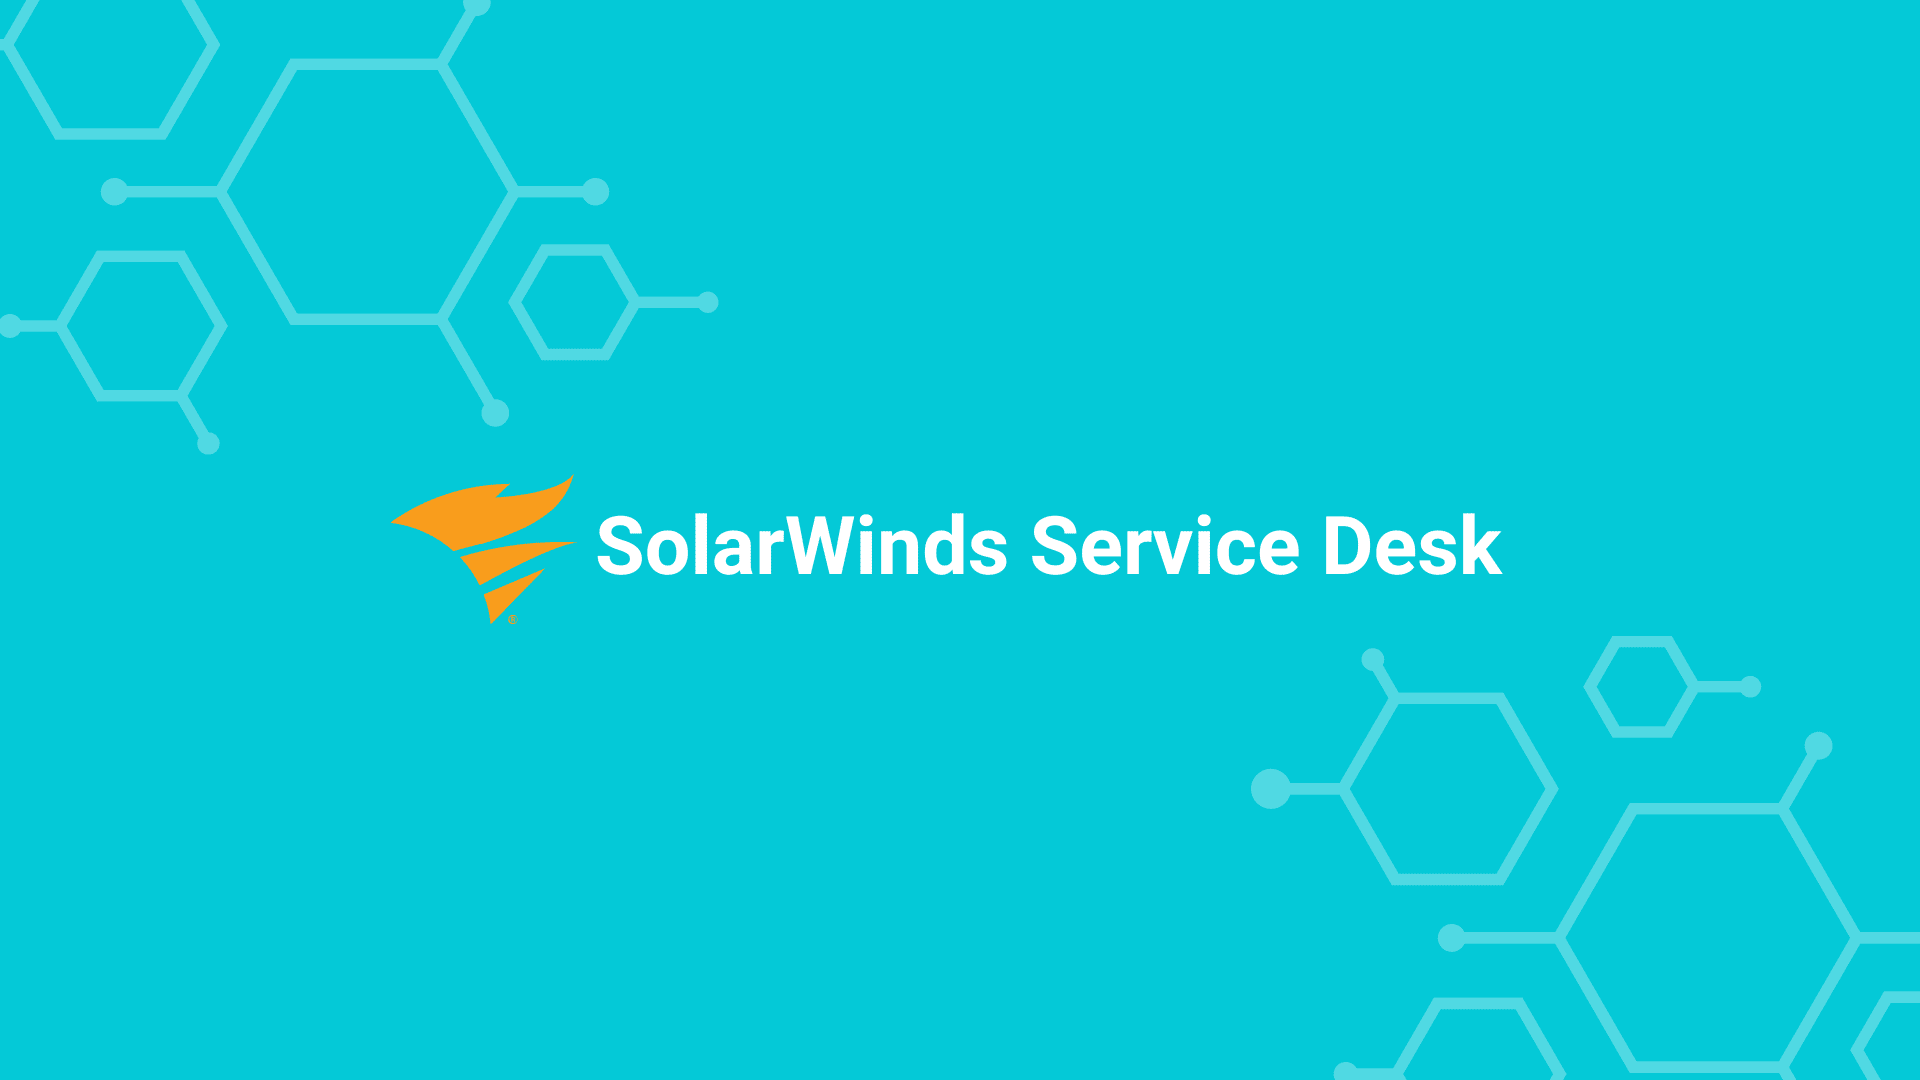 SolarWinds Service Desk Logo